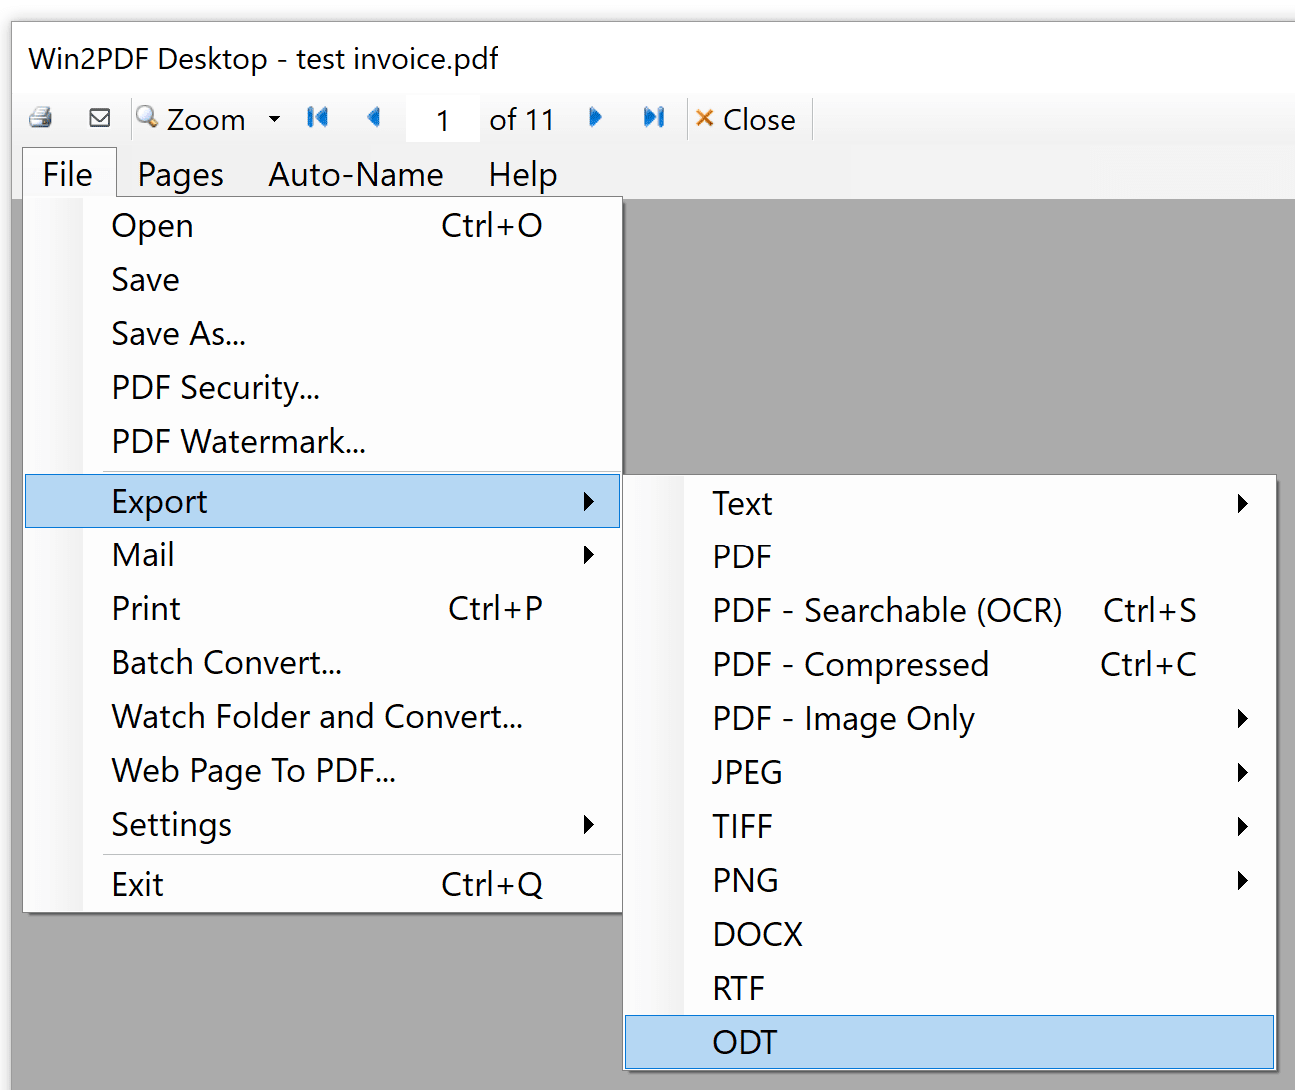 Win2PDF Desktop - Export XPS to ODT